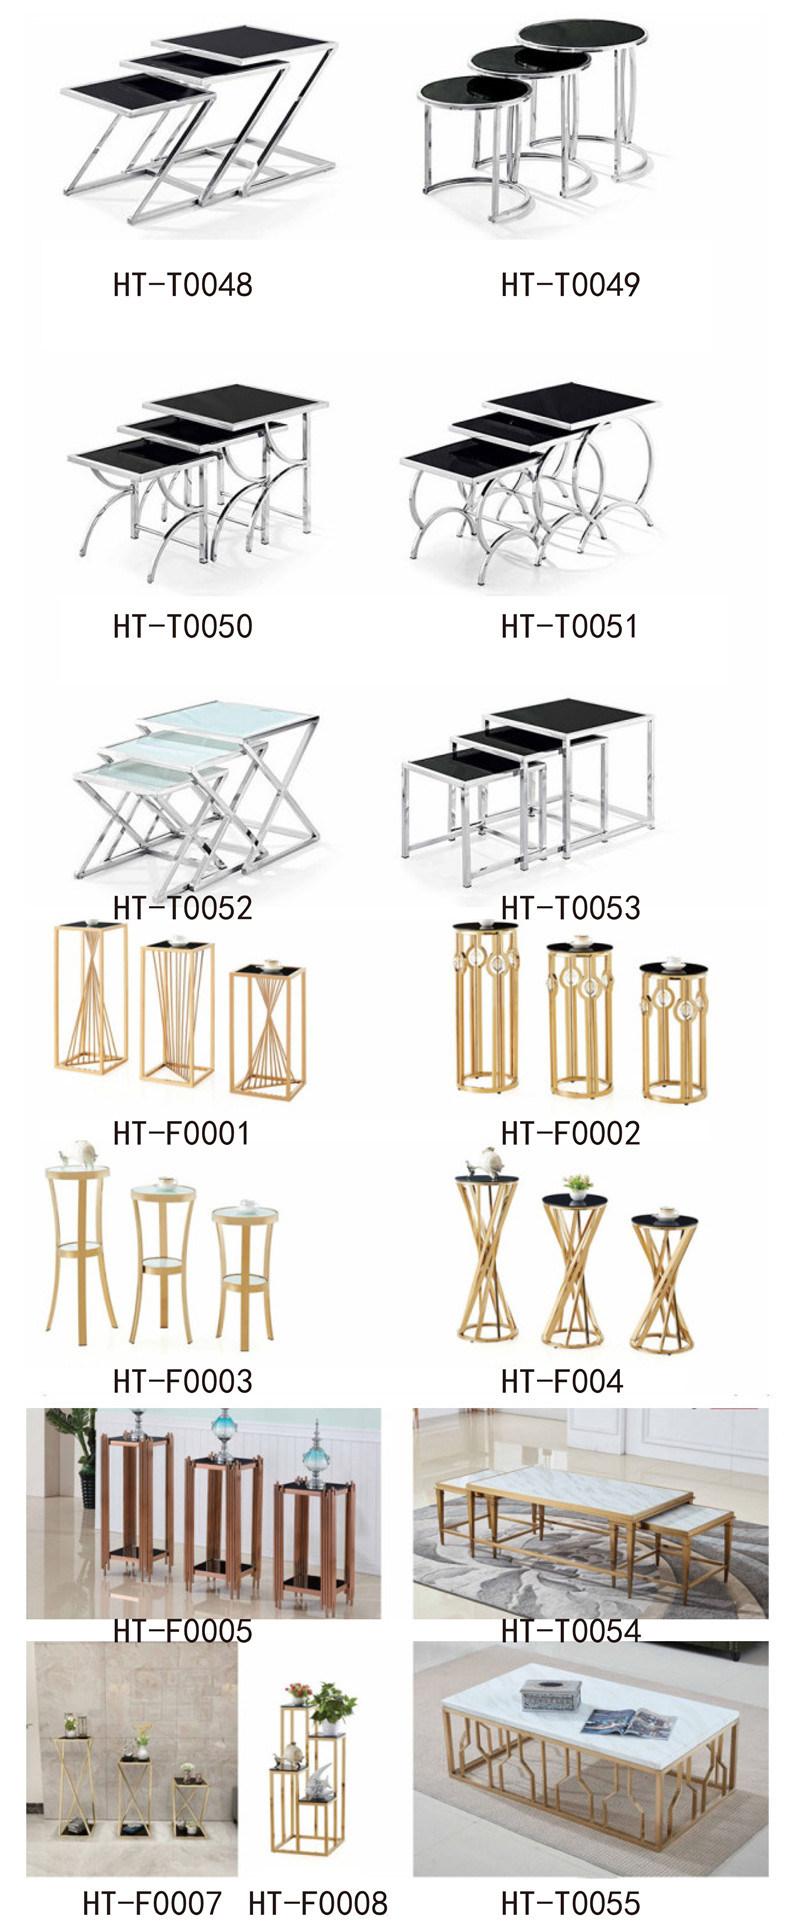 Modern Plain Glass Top Chanel Decor Ball Leg Gold Stainless Steel Base Dining Table Chair